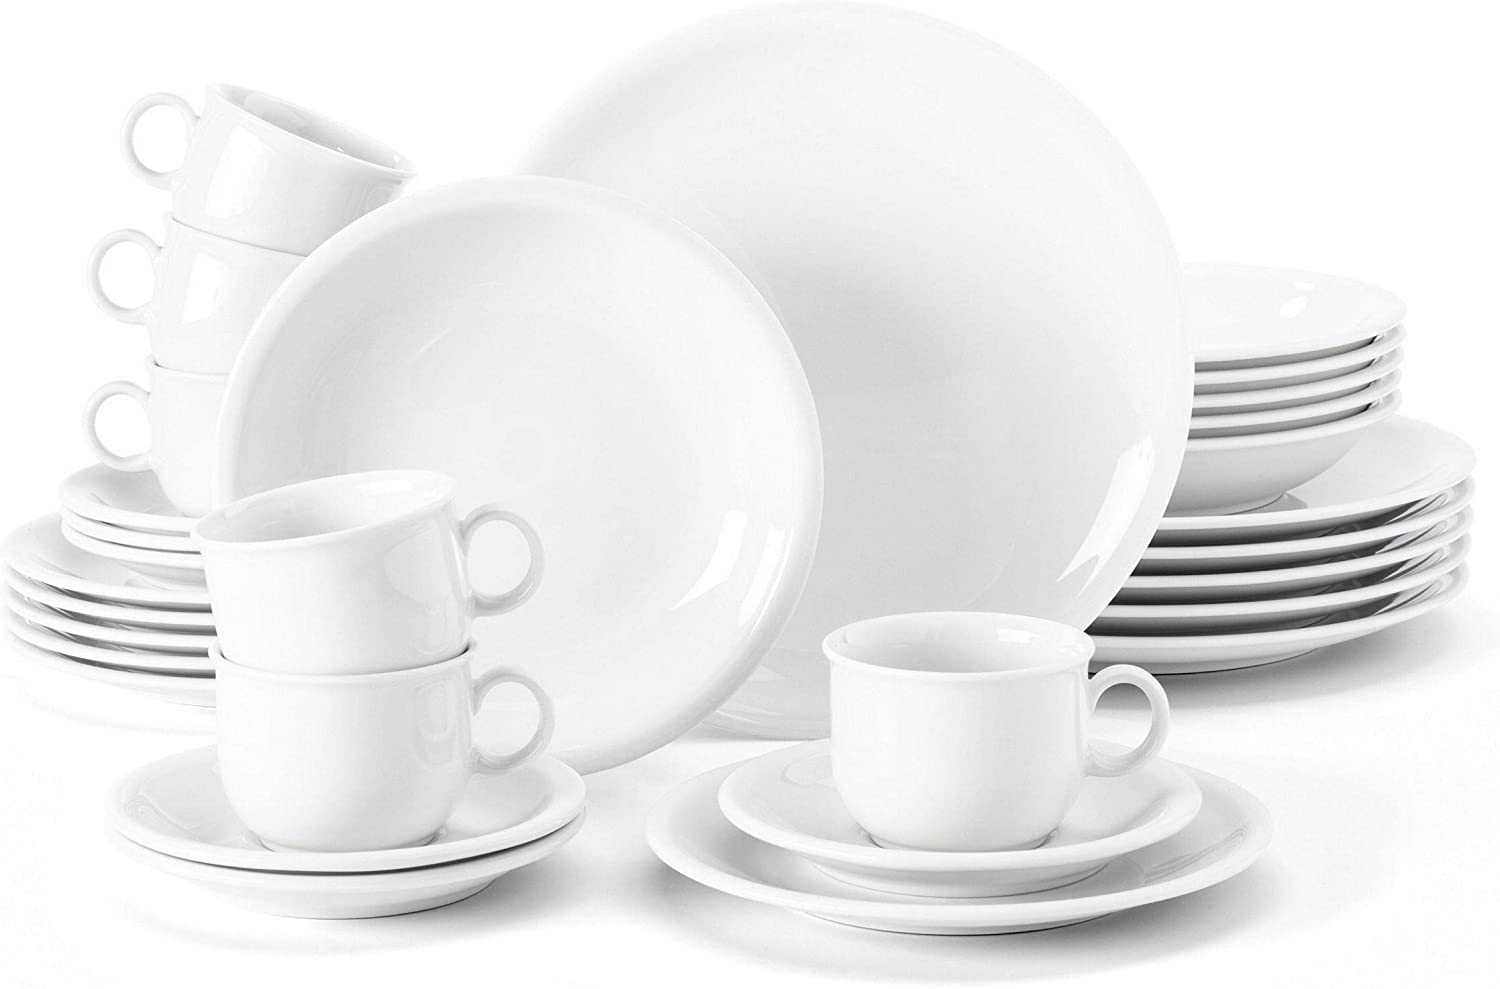 Seltmann Weiden Compact Crockery, Coffee Tableware, Porcelain, White, Dishwasher Safe, 30-pcs., 1716175